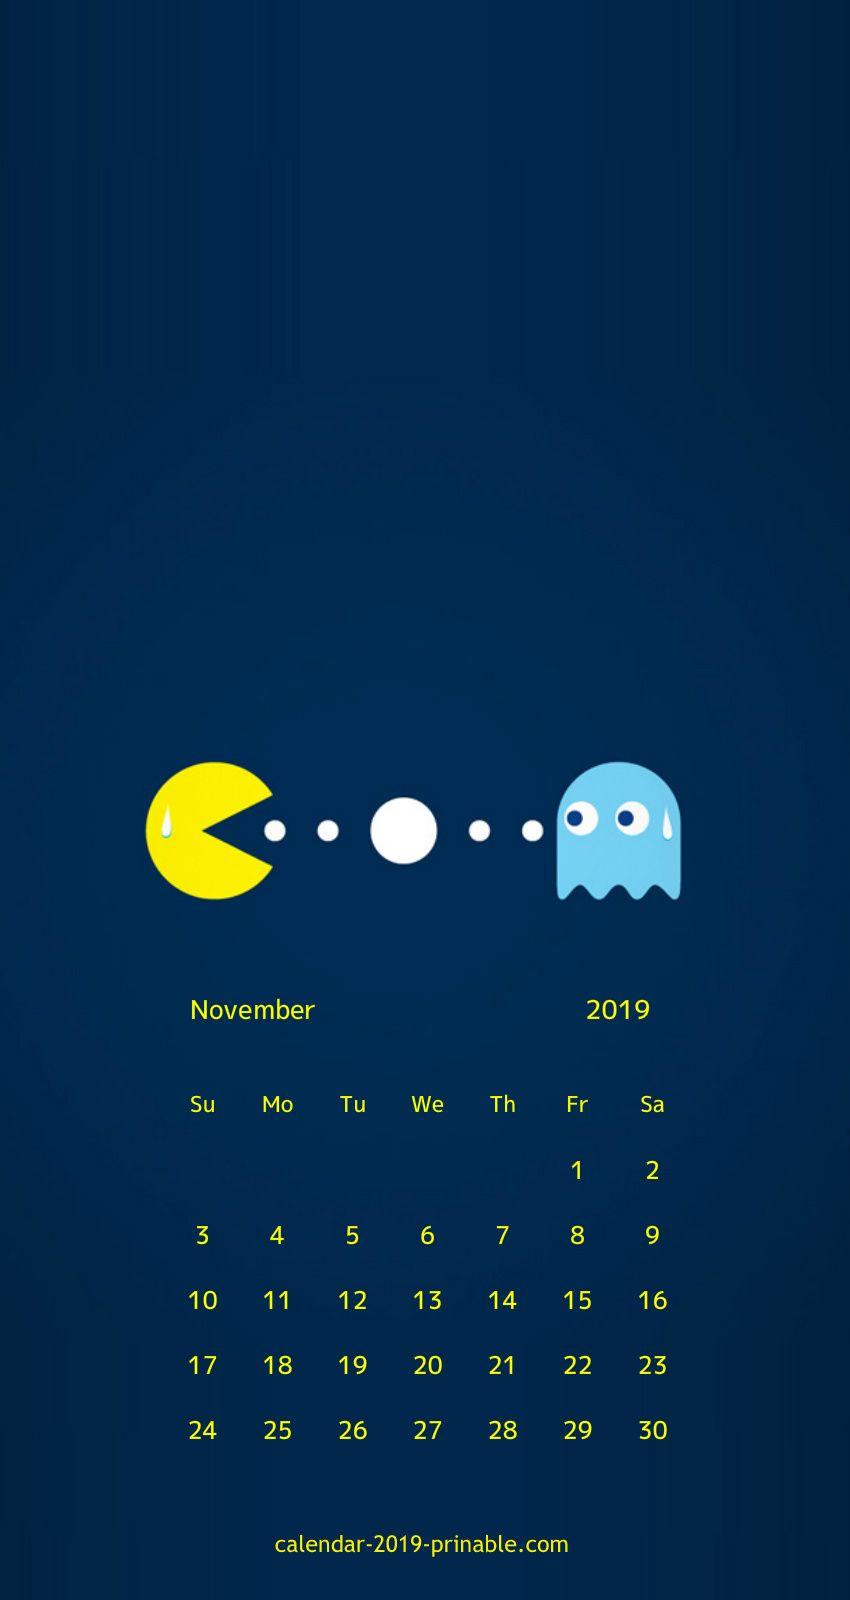 november 2019 iphone calendar wallpaper. Wallpaper and Stuff⭐